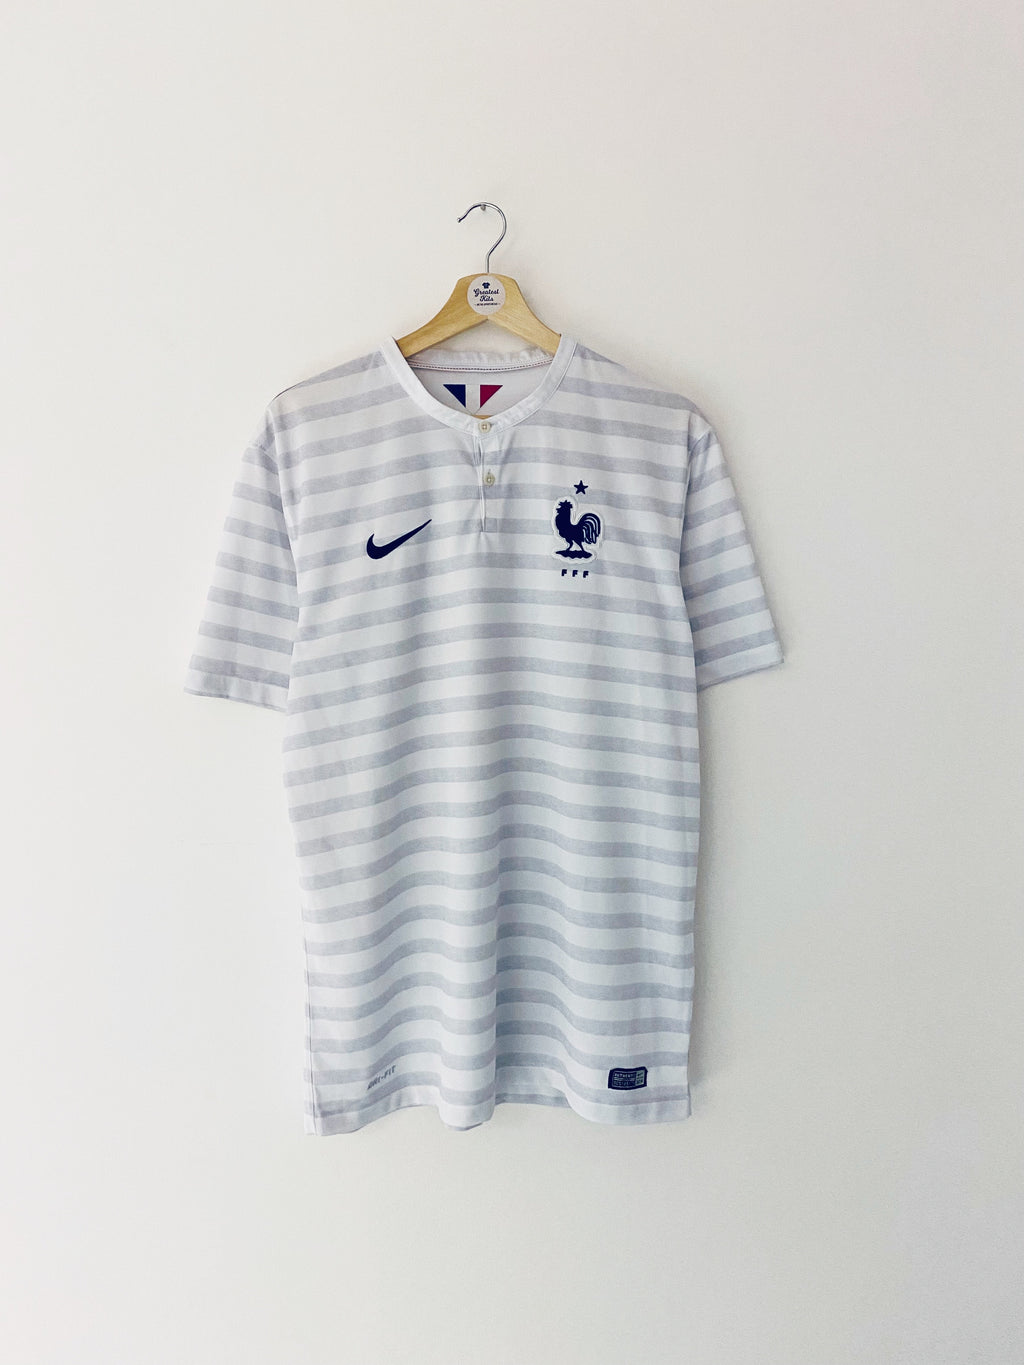 2014/15 France Away Shirt (L) 9.5/10